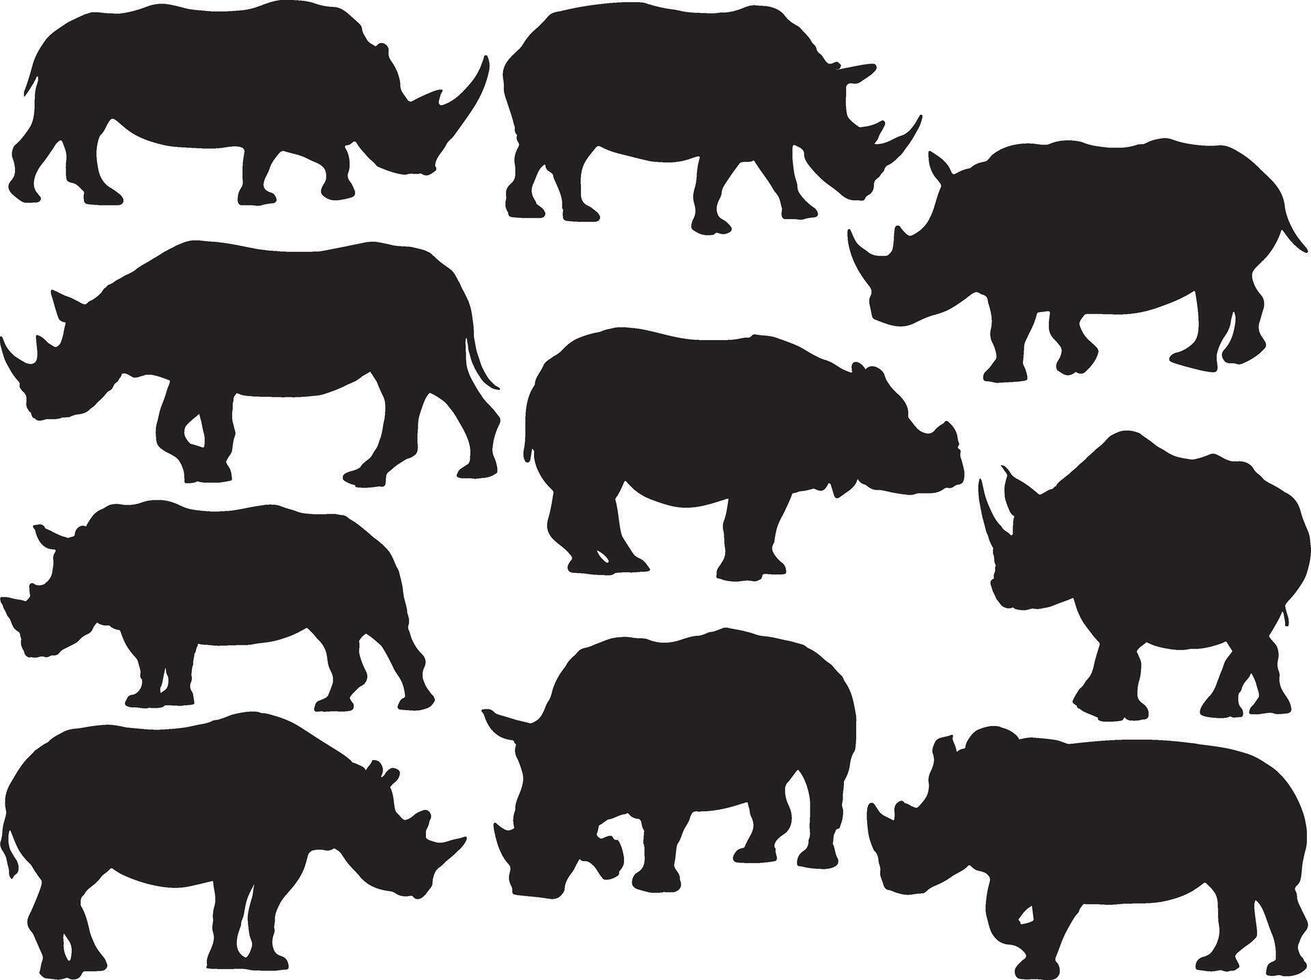 Rhino silhouette on white background vector